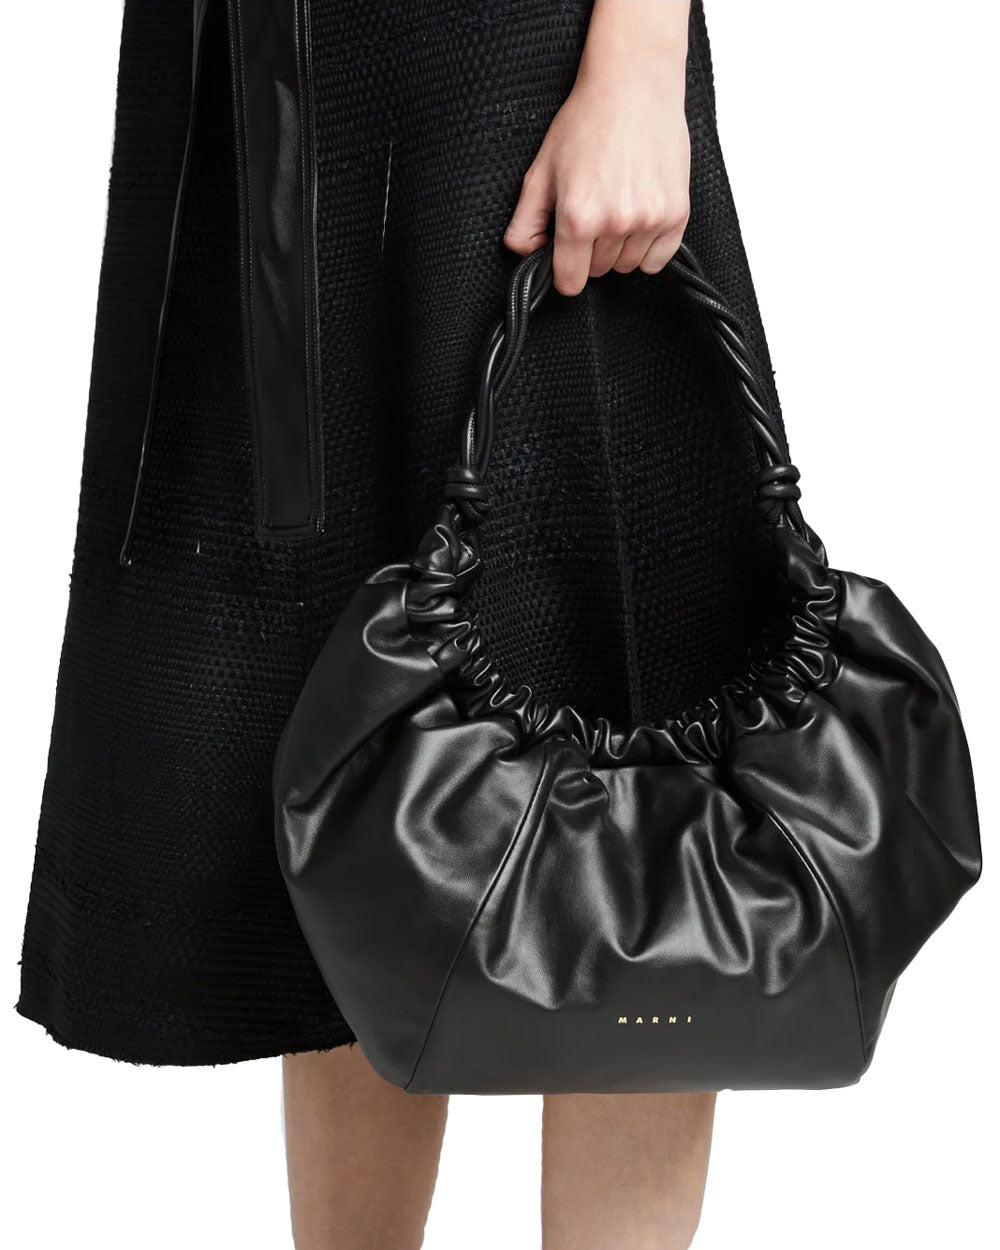 Twirl Small Bag in Black